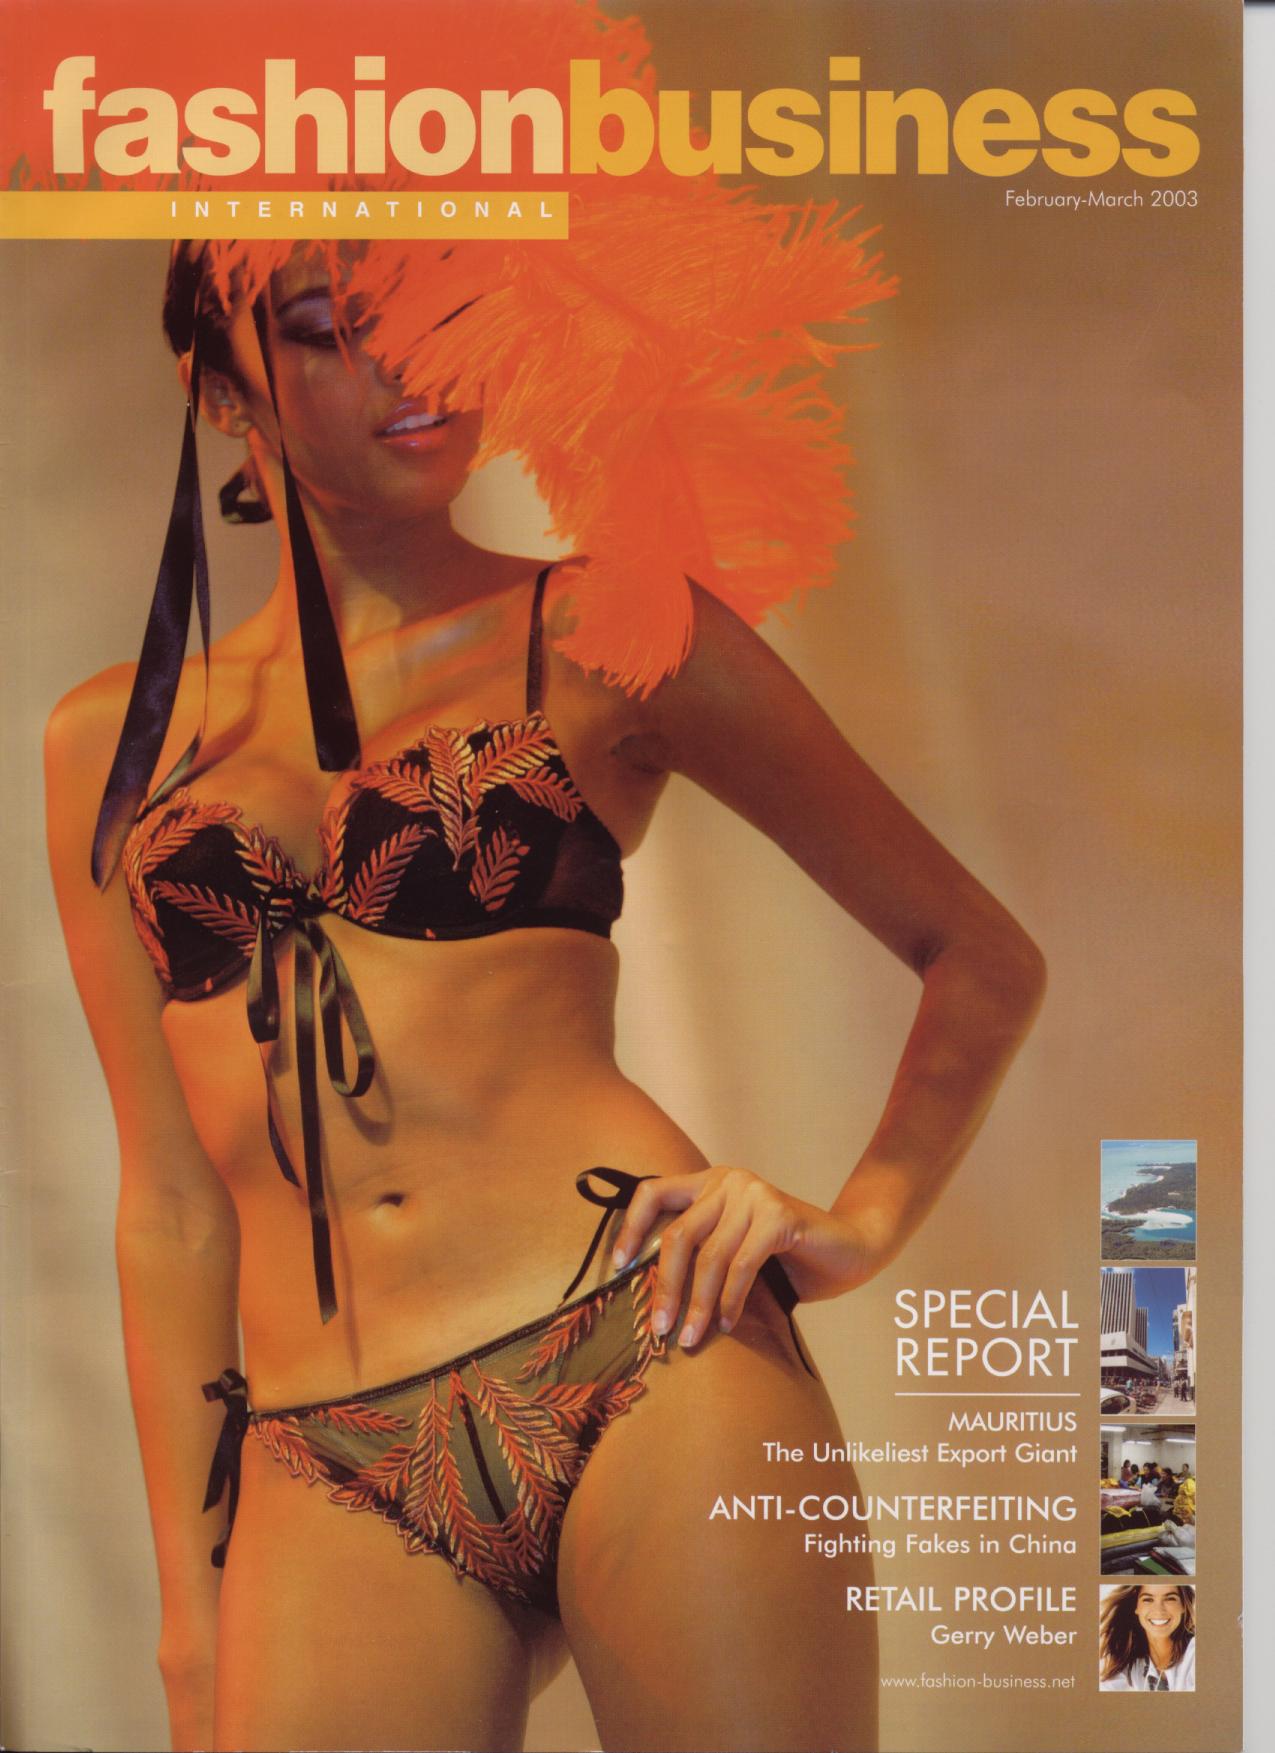 Cover page of Fashion Business International magazine Feb - Mar 2003